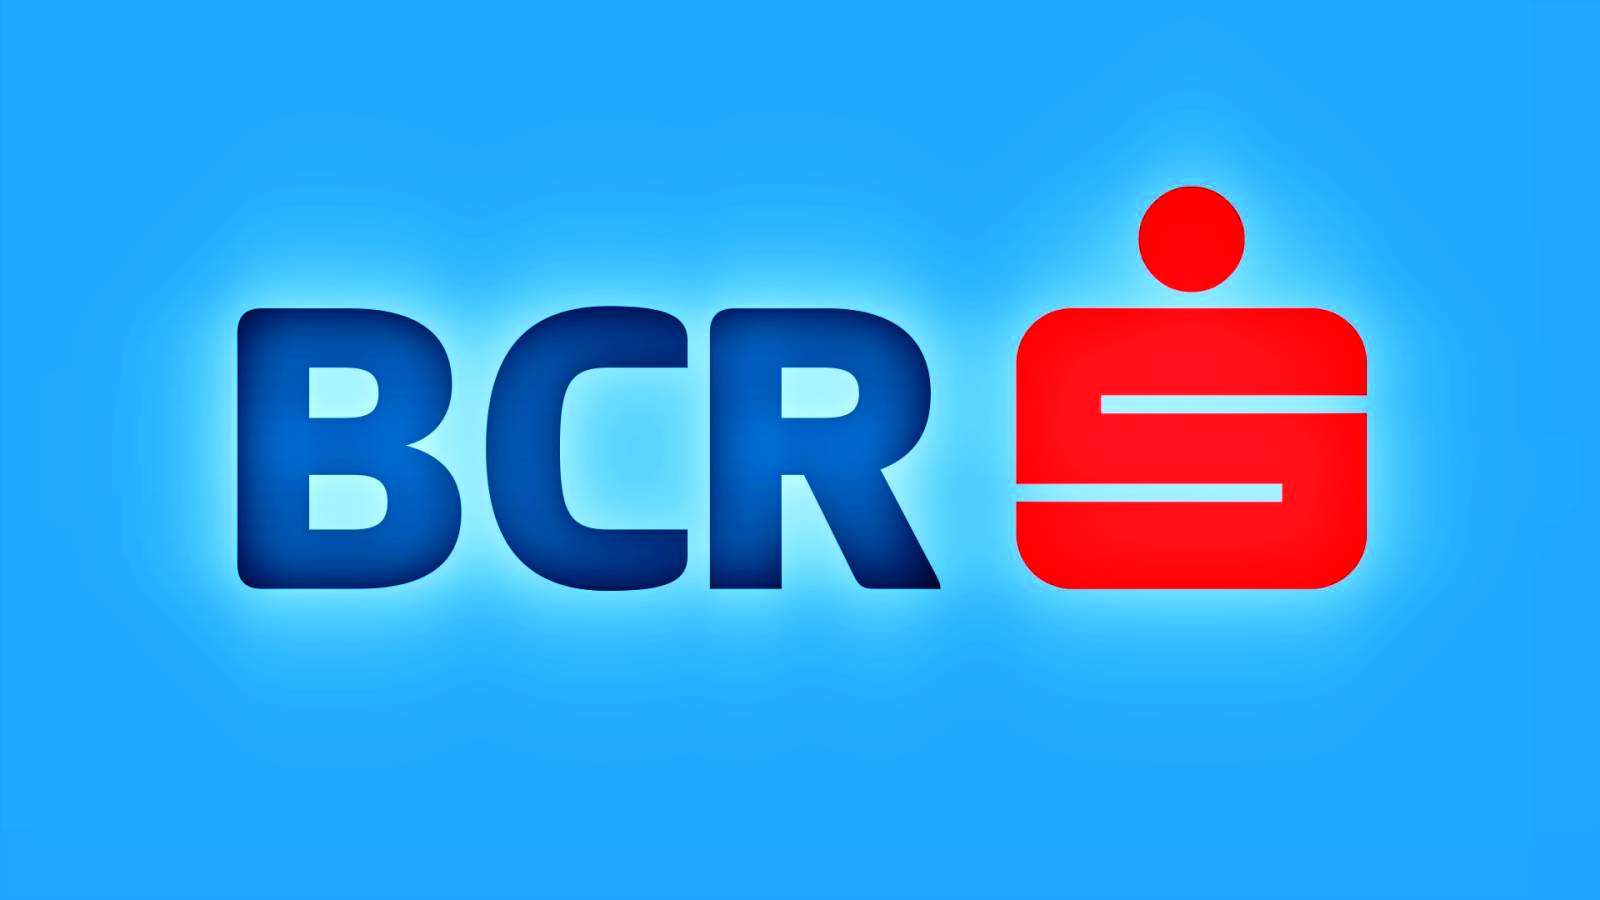 BCR Romania vacation